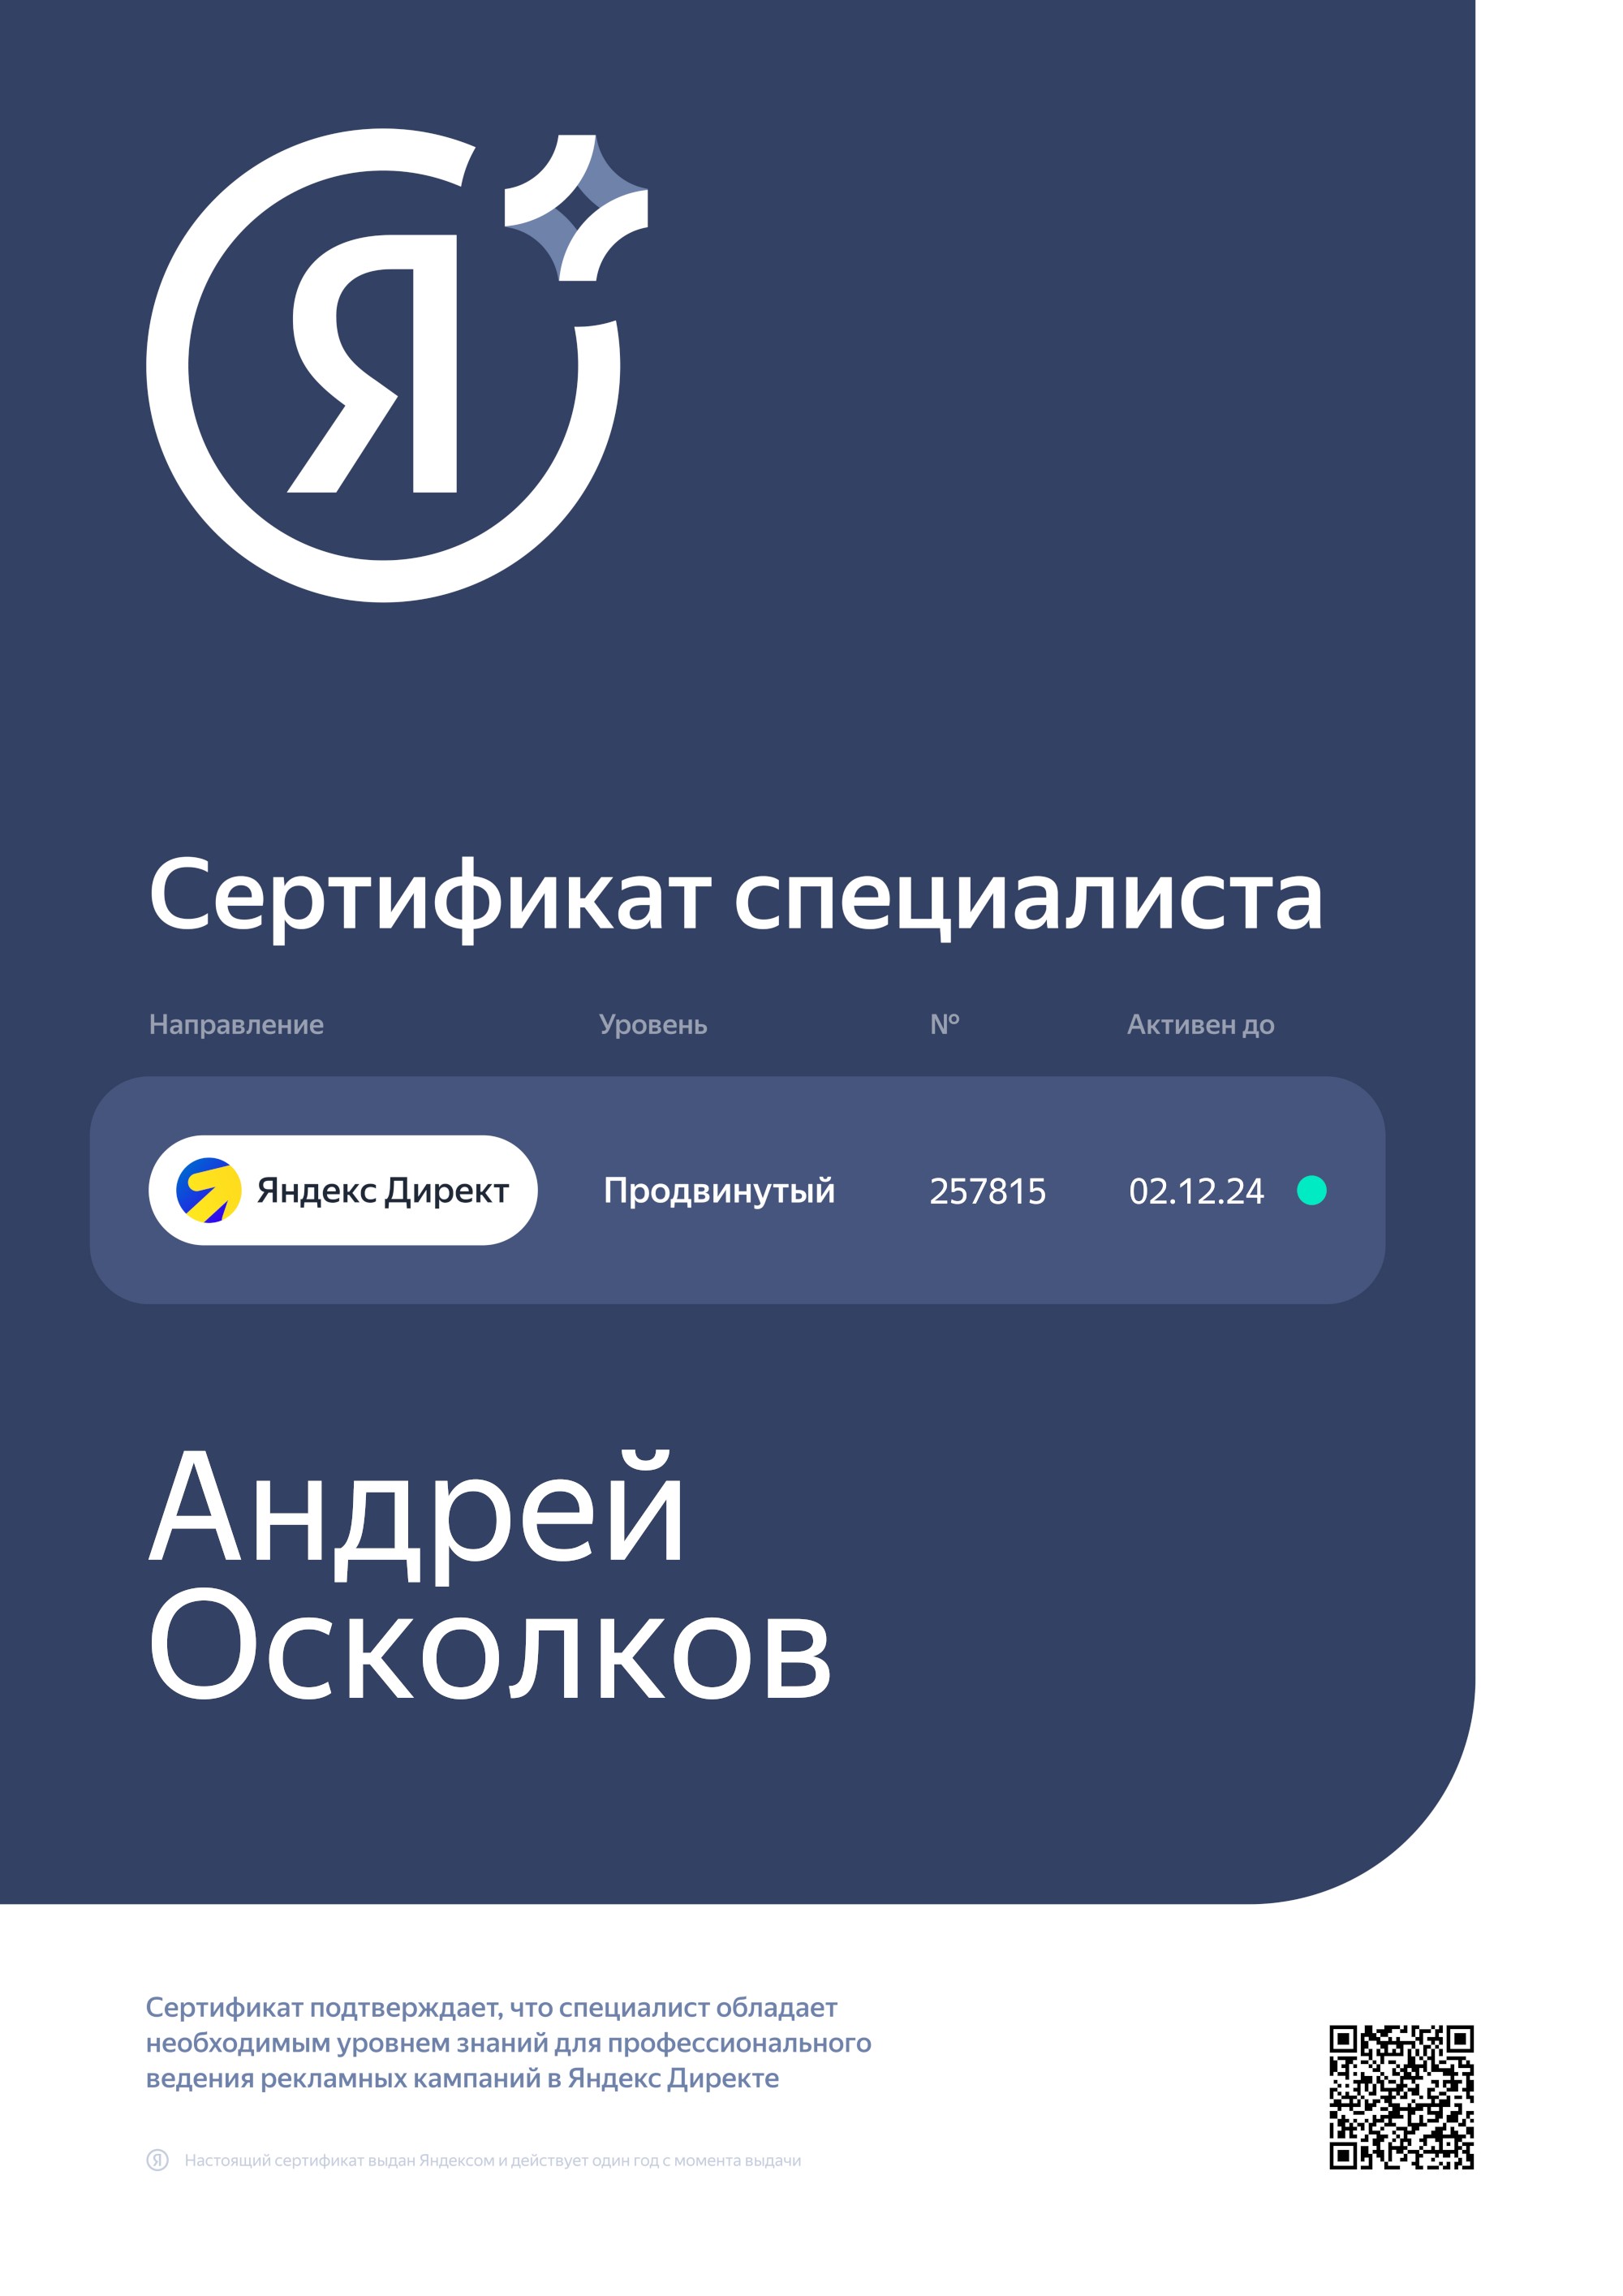 Сертификат специалиста Яндекс.Директ. Андрей Осколков.